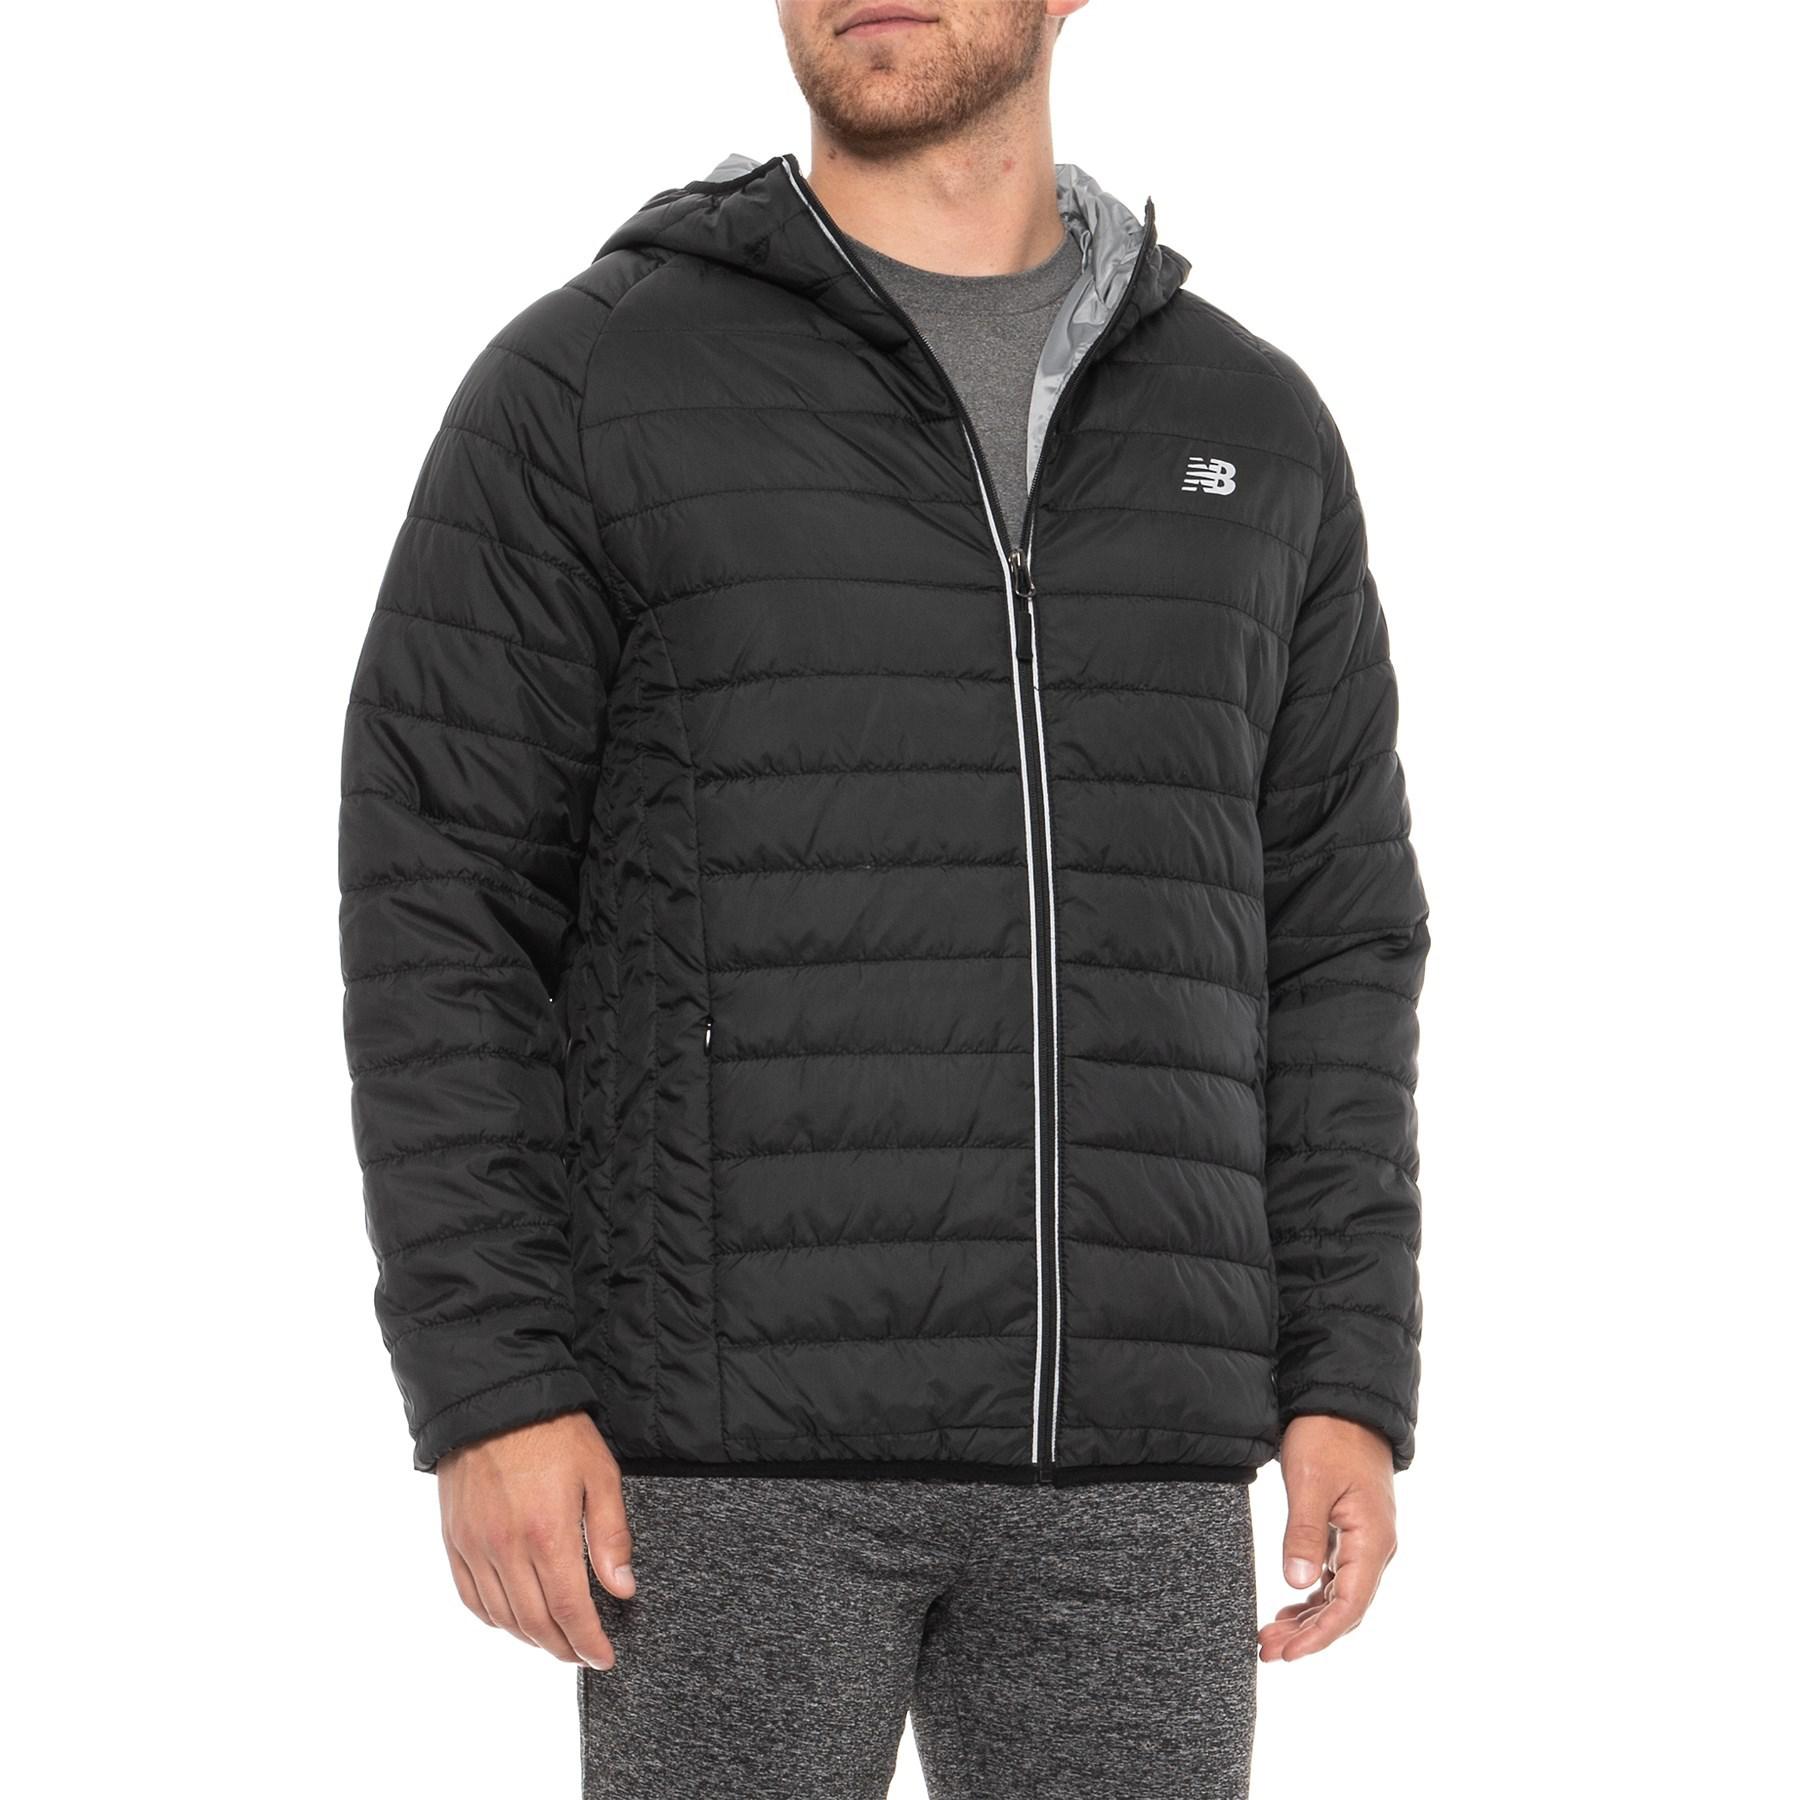 Buy new balance hooded jacket> OFF-61%